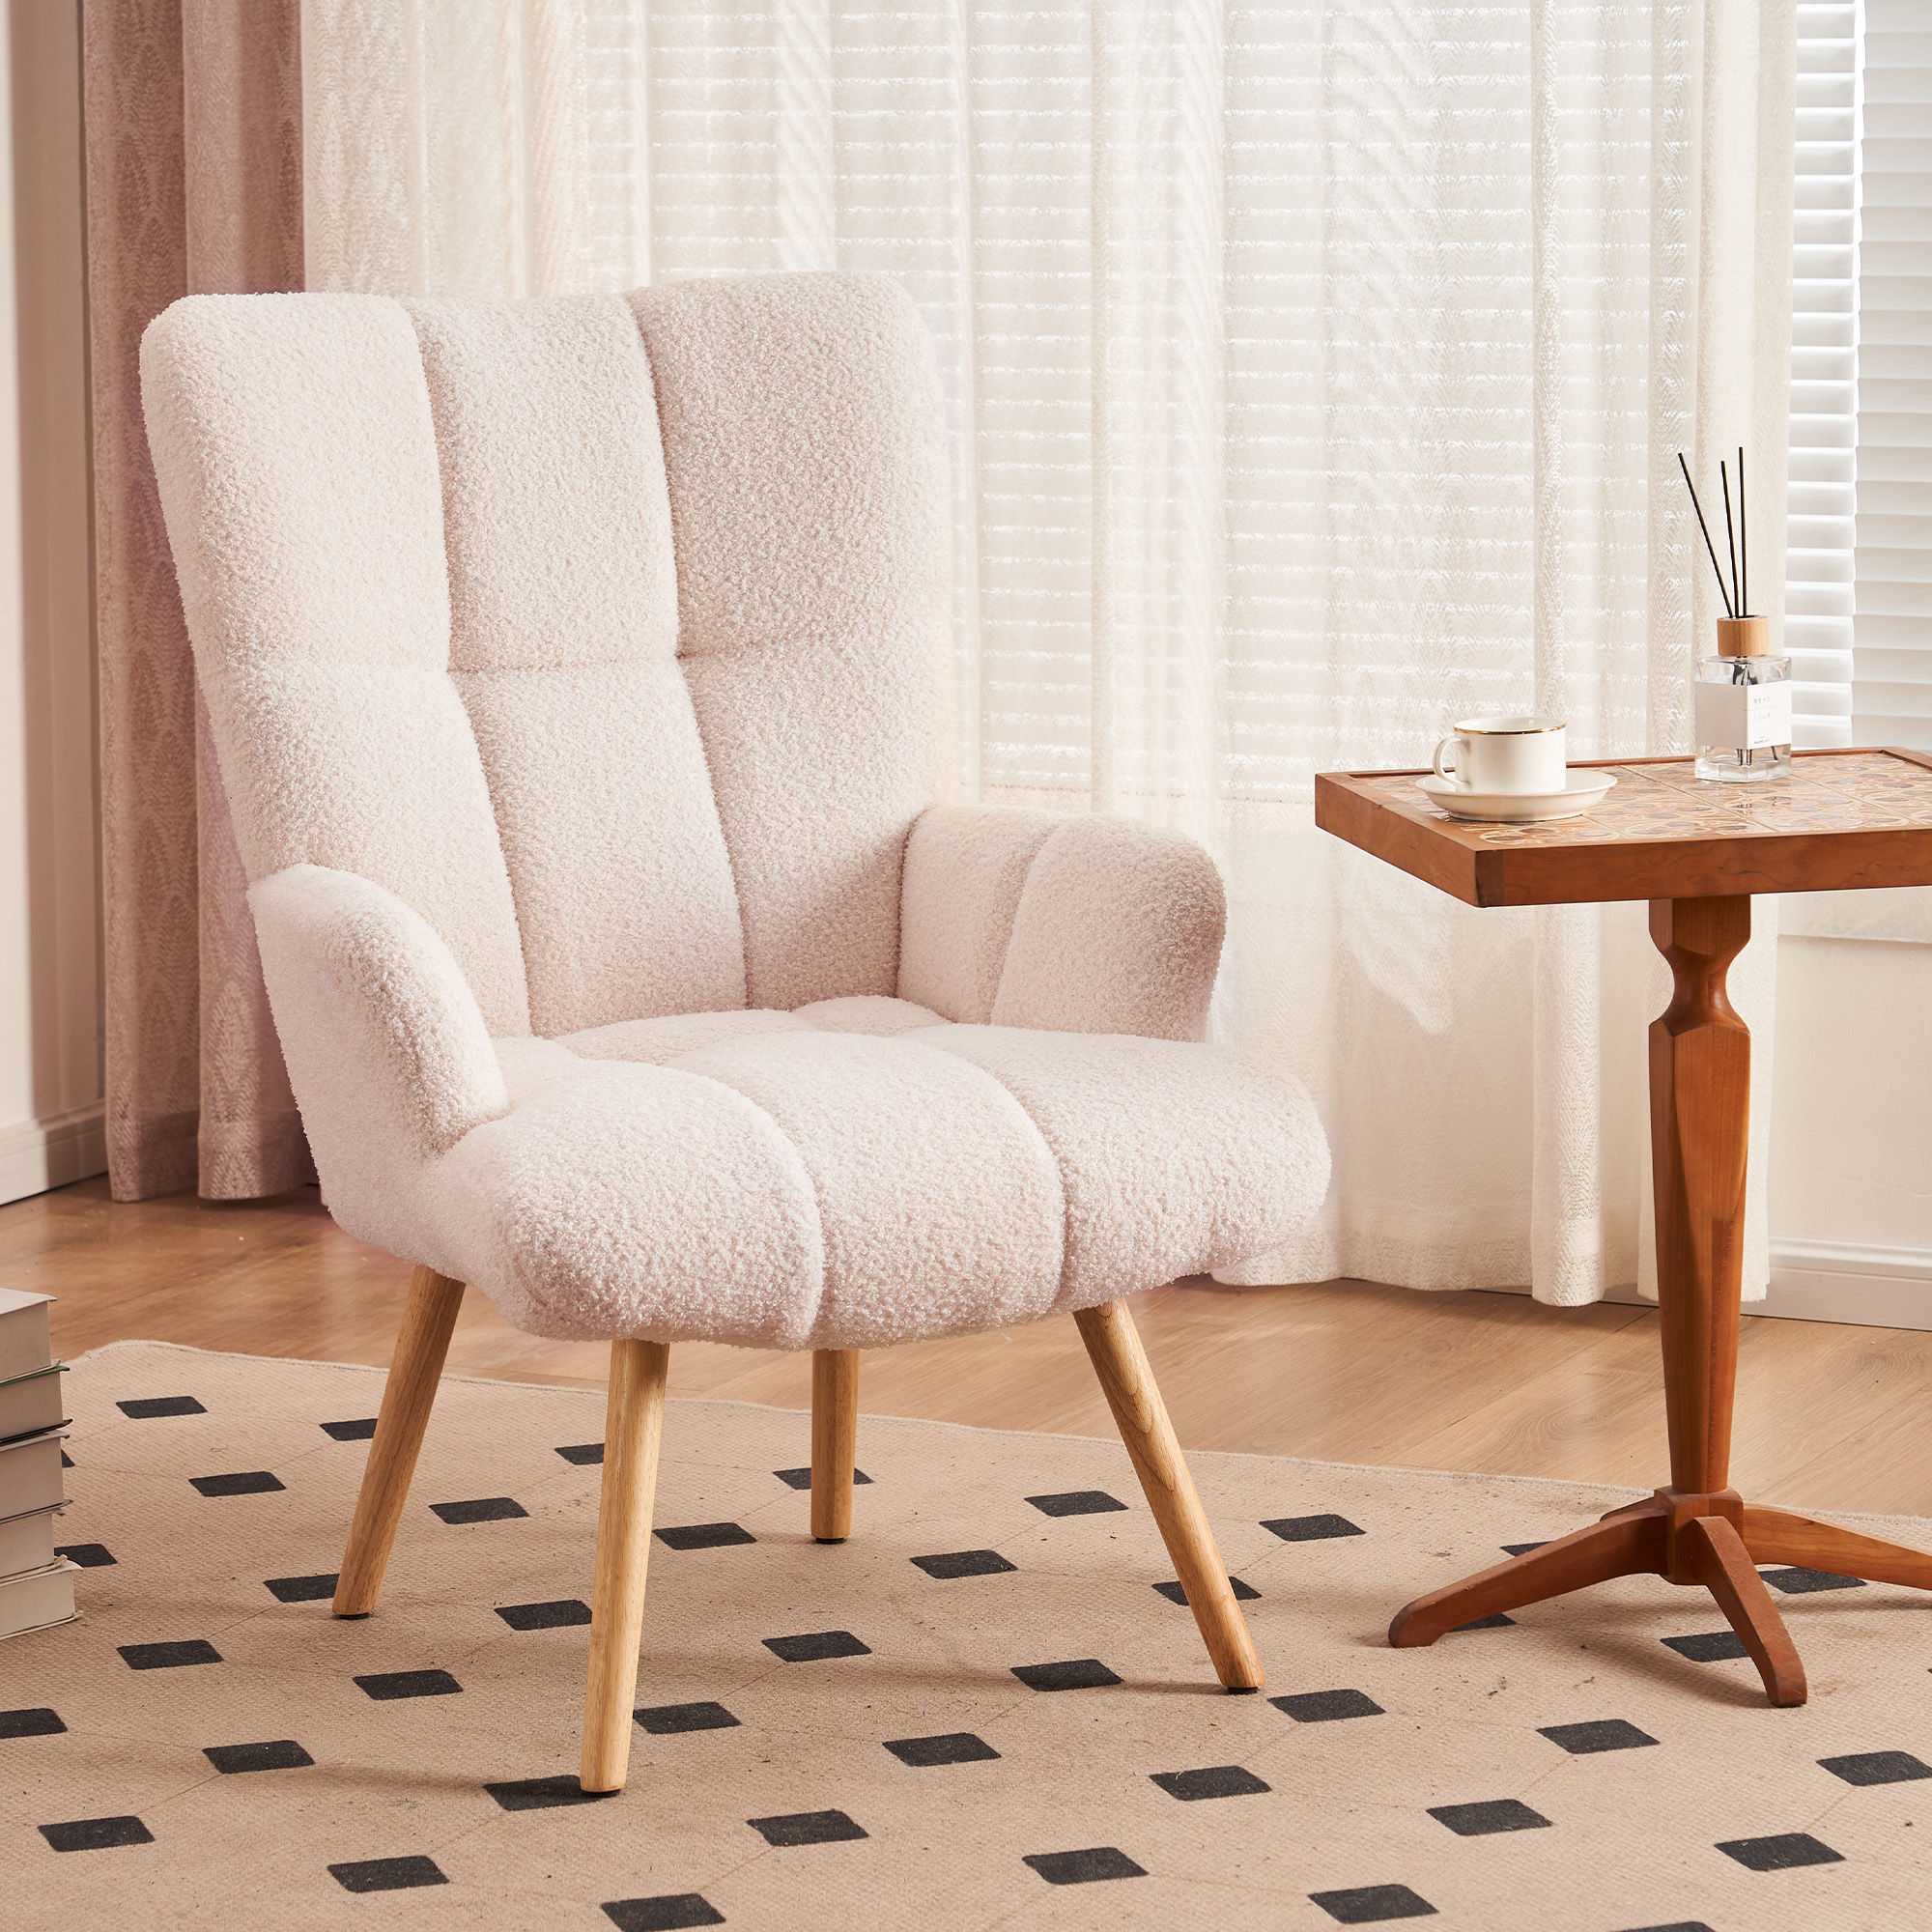 Mordern Accent Chair, Upholstered High Back Comfy Living Room Chair, Wingback Armchair, Basic Teddy Velvet Chair - White